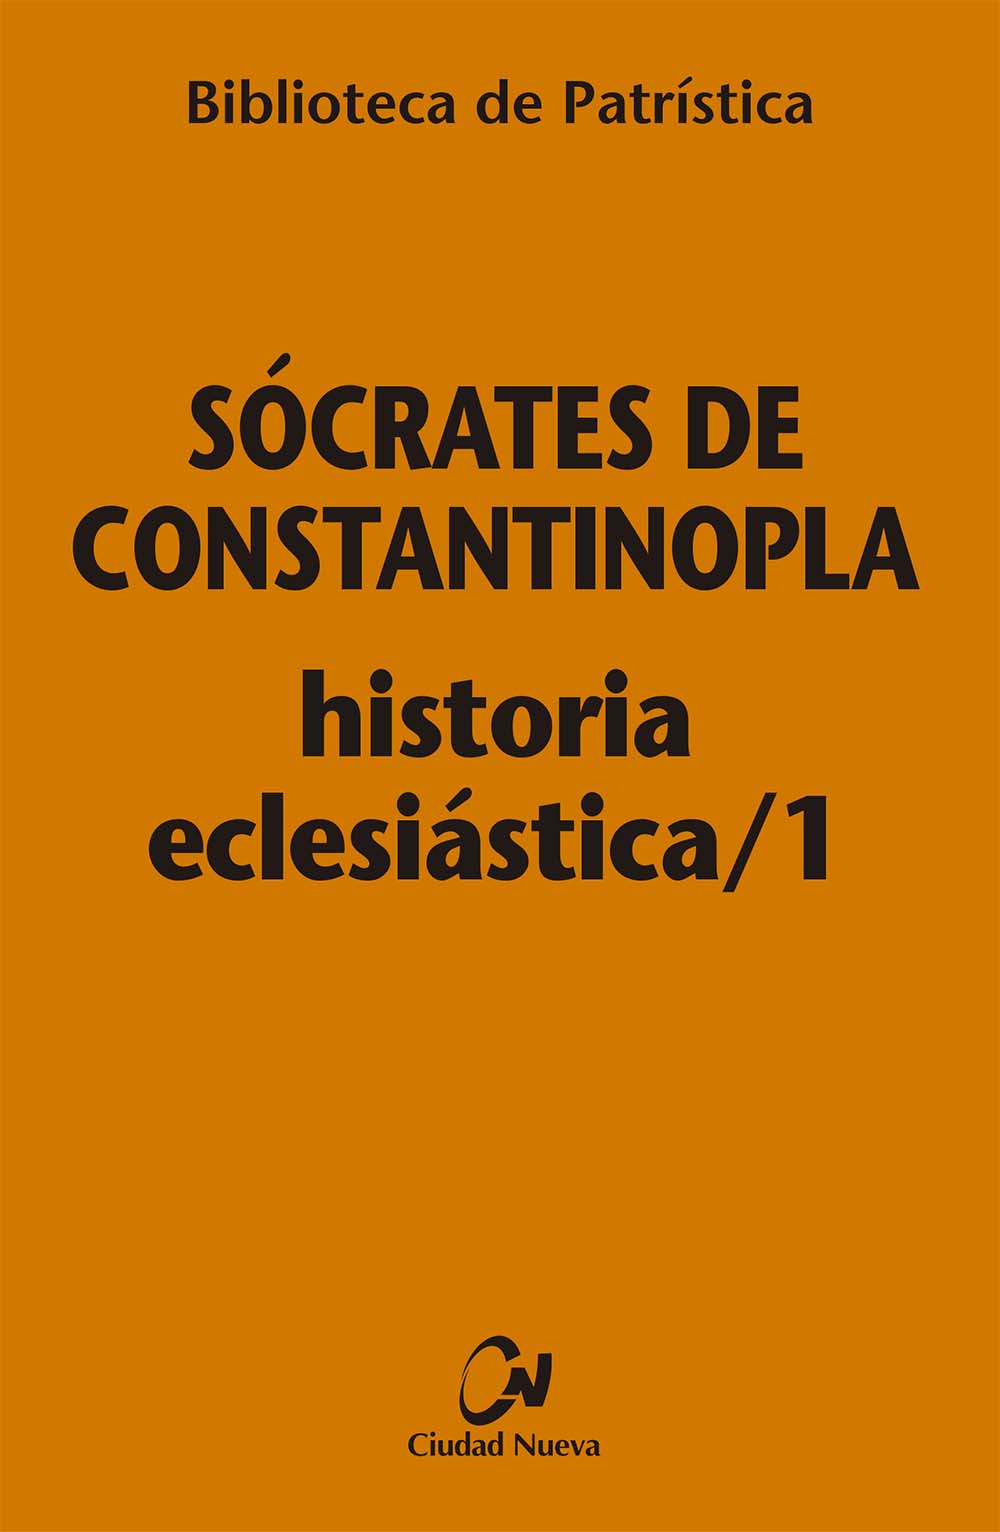 historia-eclesiastica-1-[bpa-106]